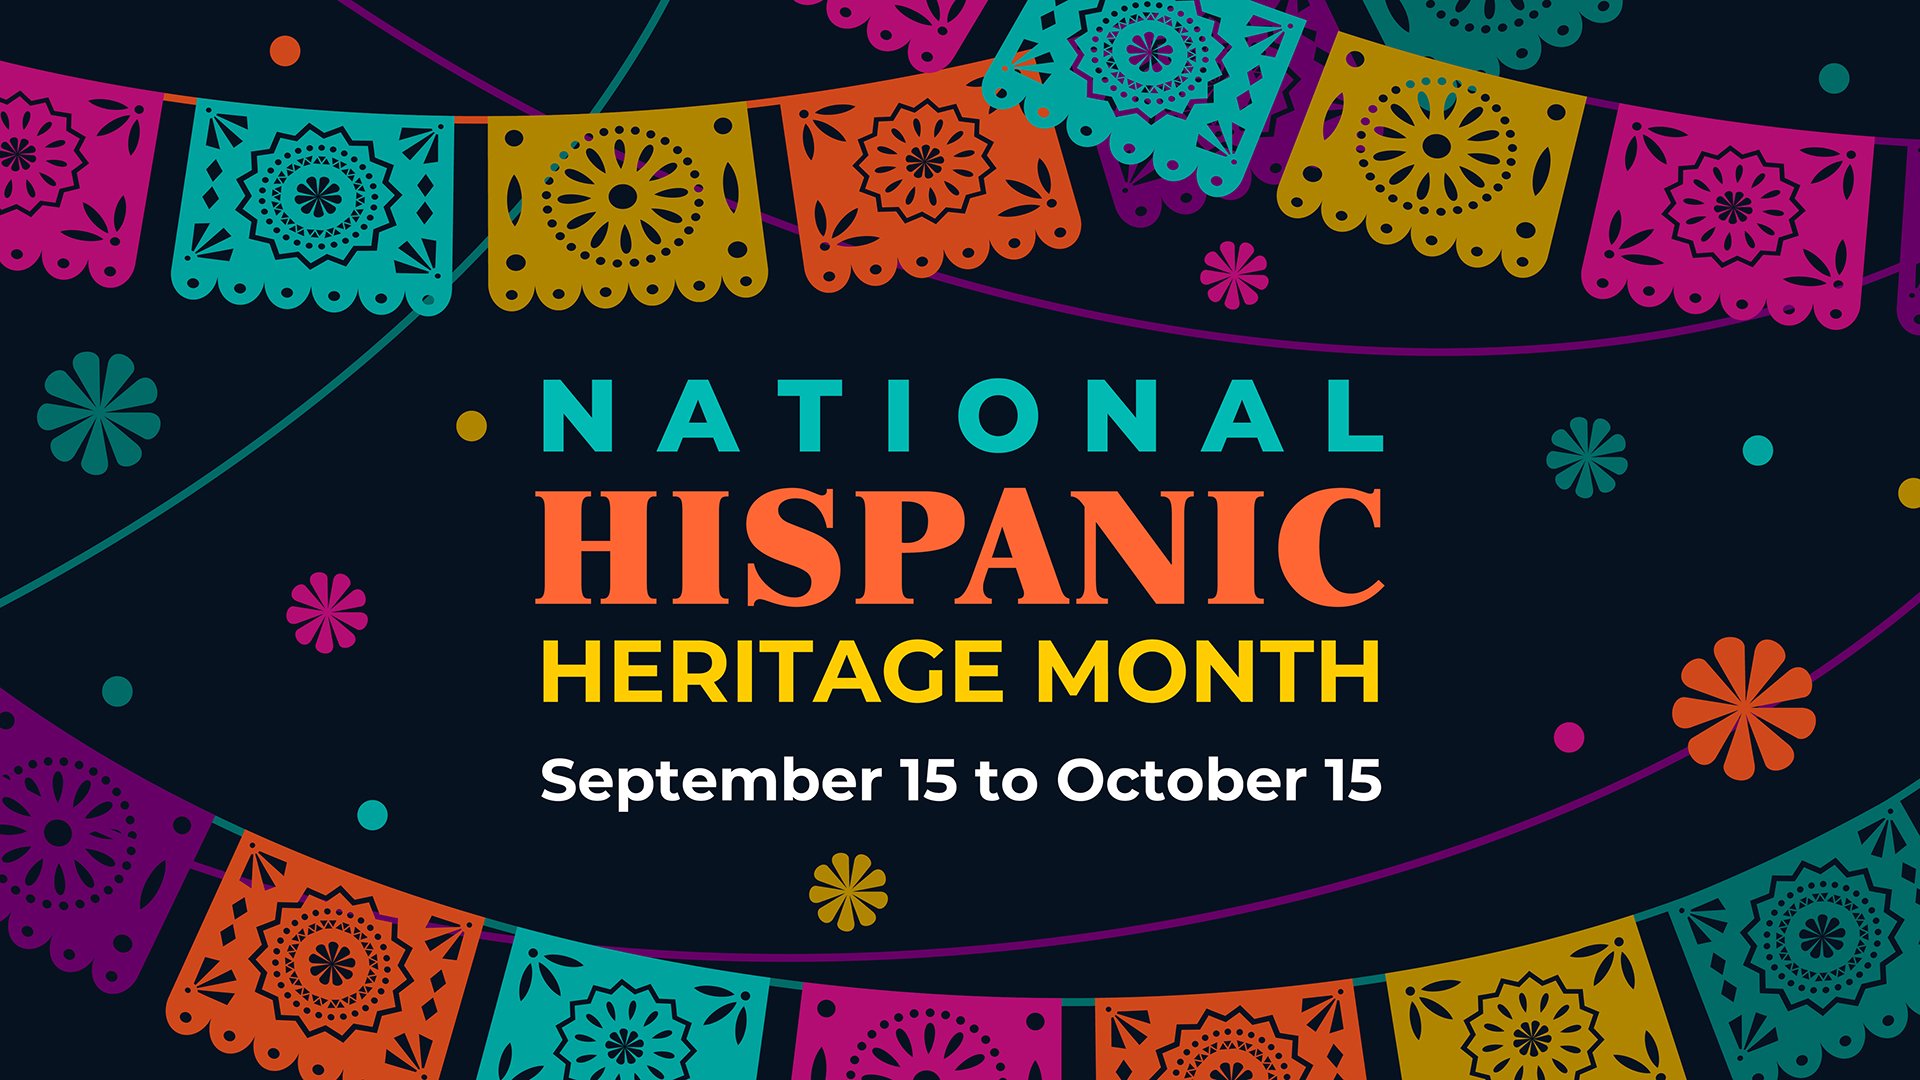 Image of Hispanic Heritage Month logo